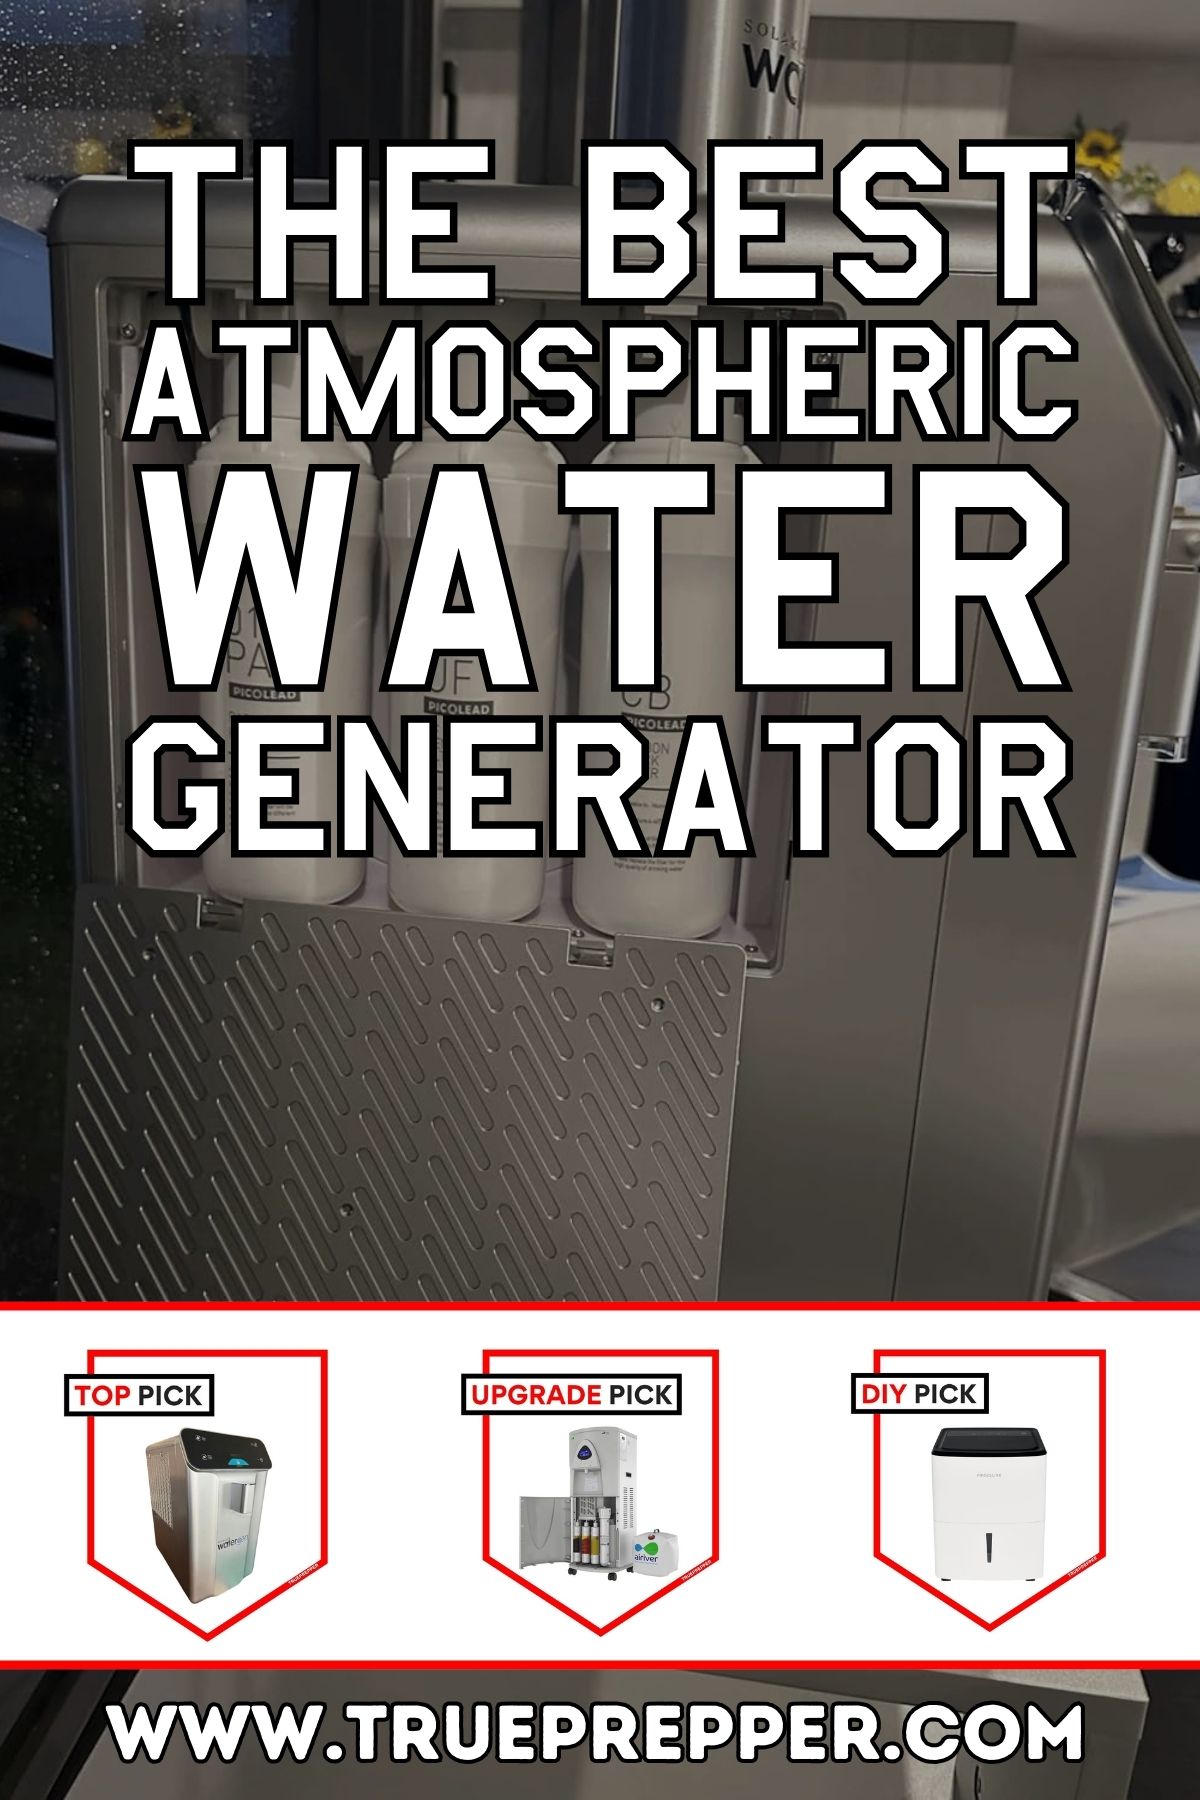 The Best Atmospheric Water Generator